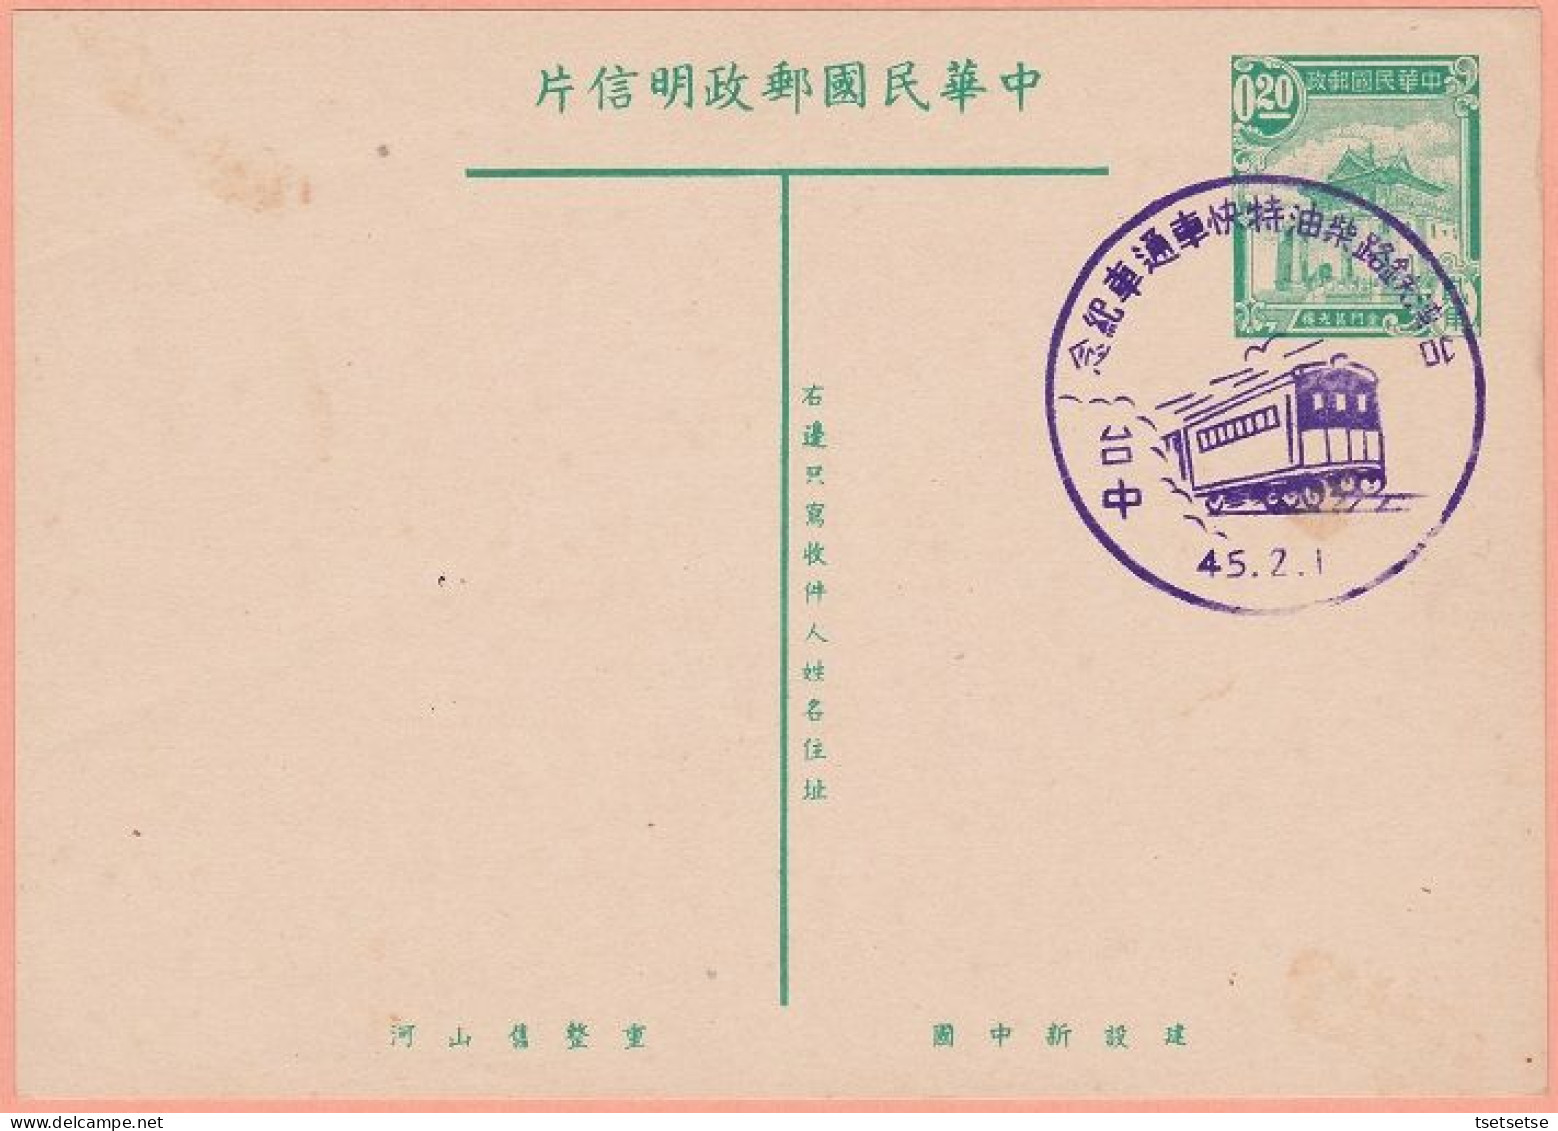 1956 RO China Taiwan Train Express postcard